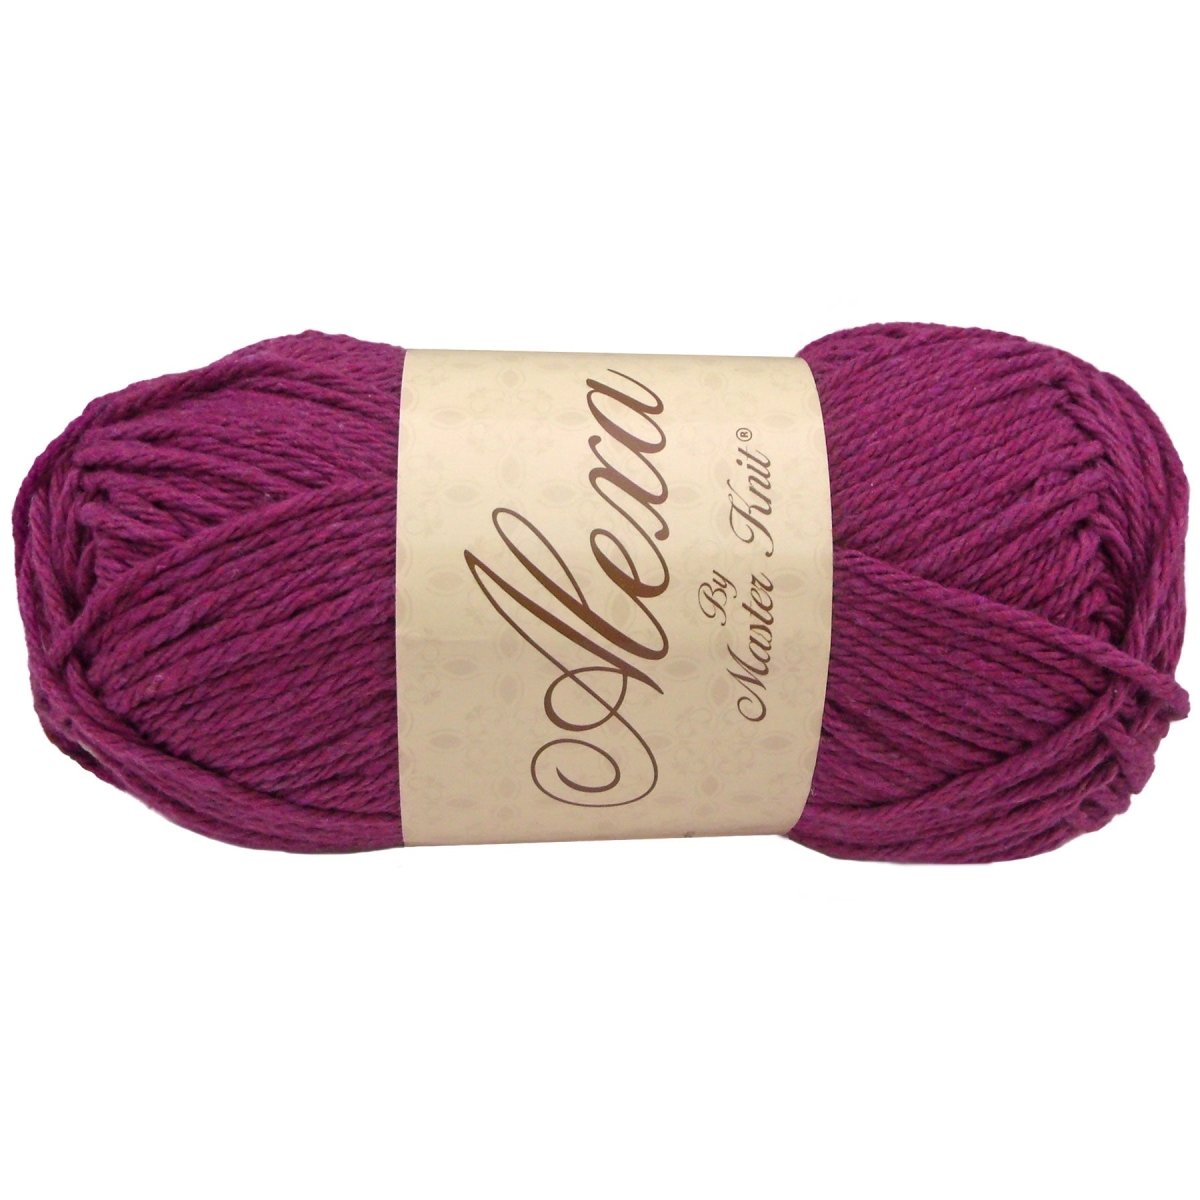 ALEXA - Crochetstores9340-725